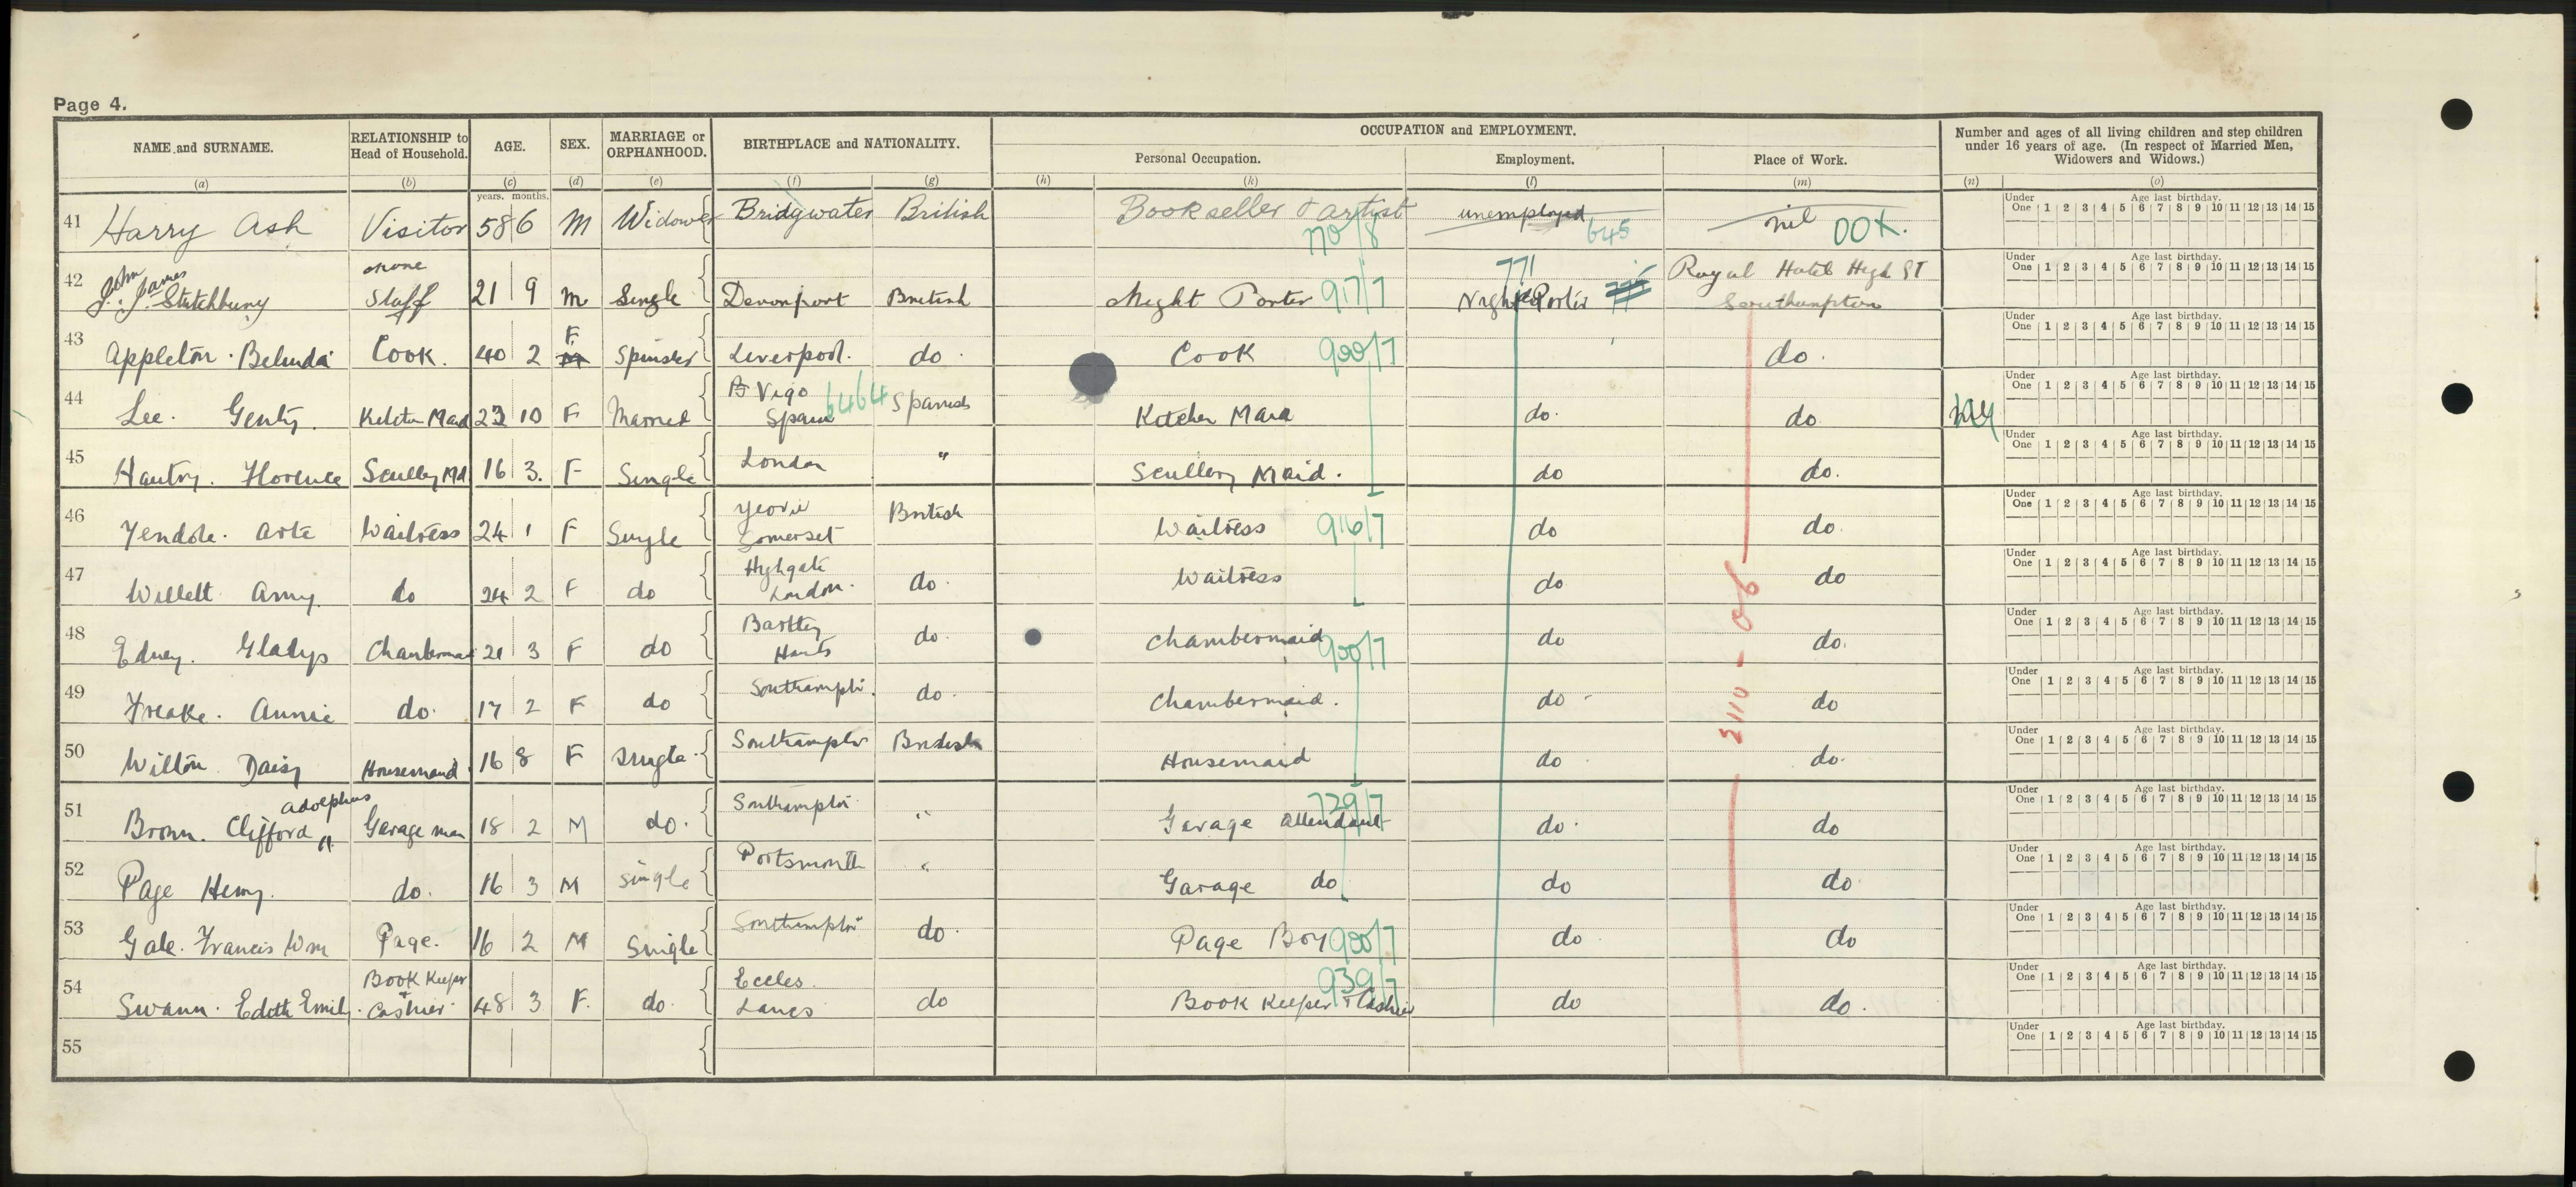 Harry Ash's 1921 Census record.